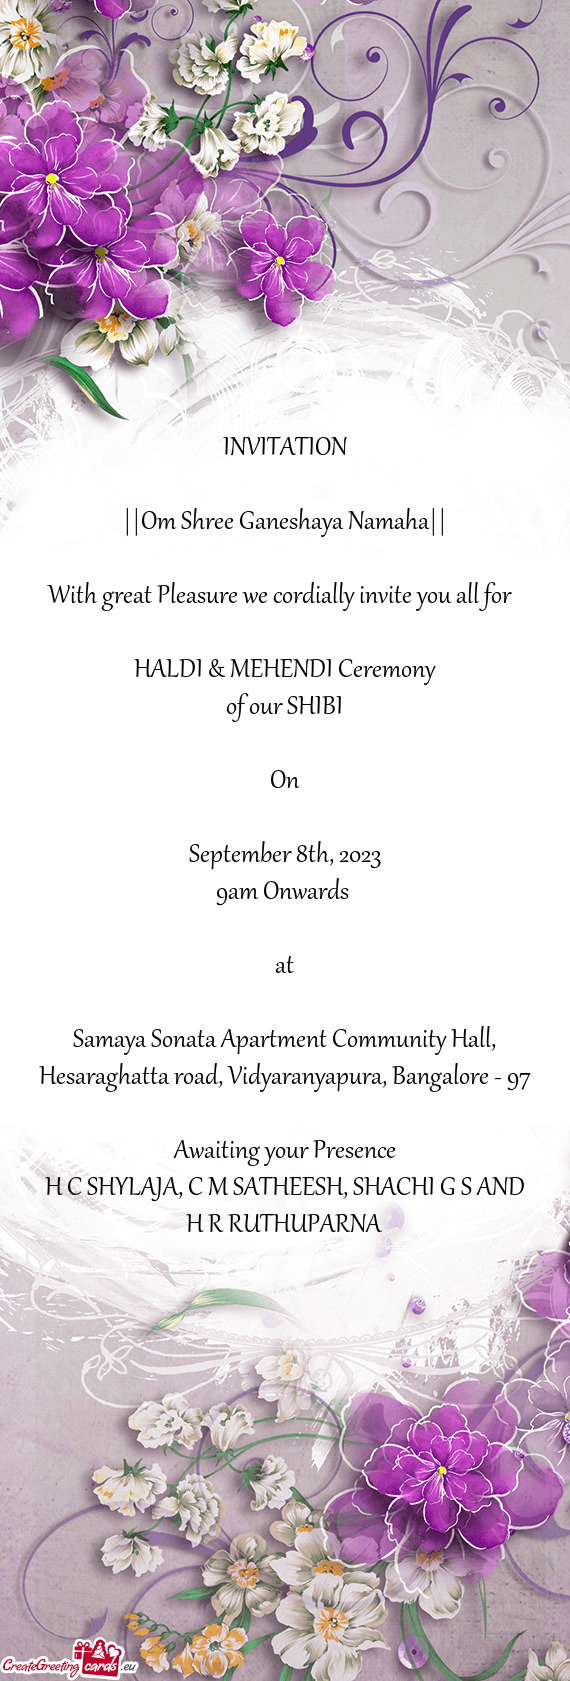 HALDI & MEHENDI Ceremony